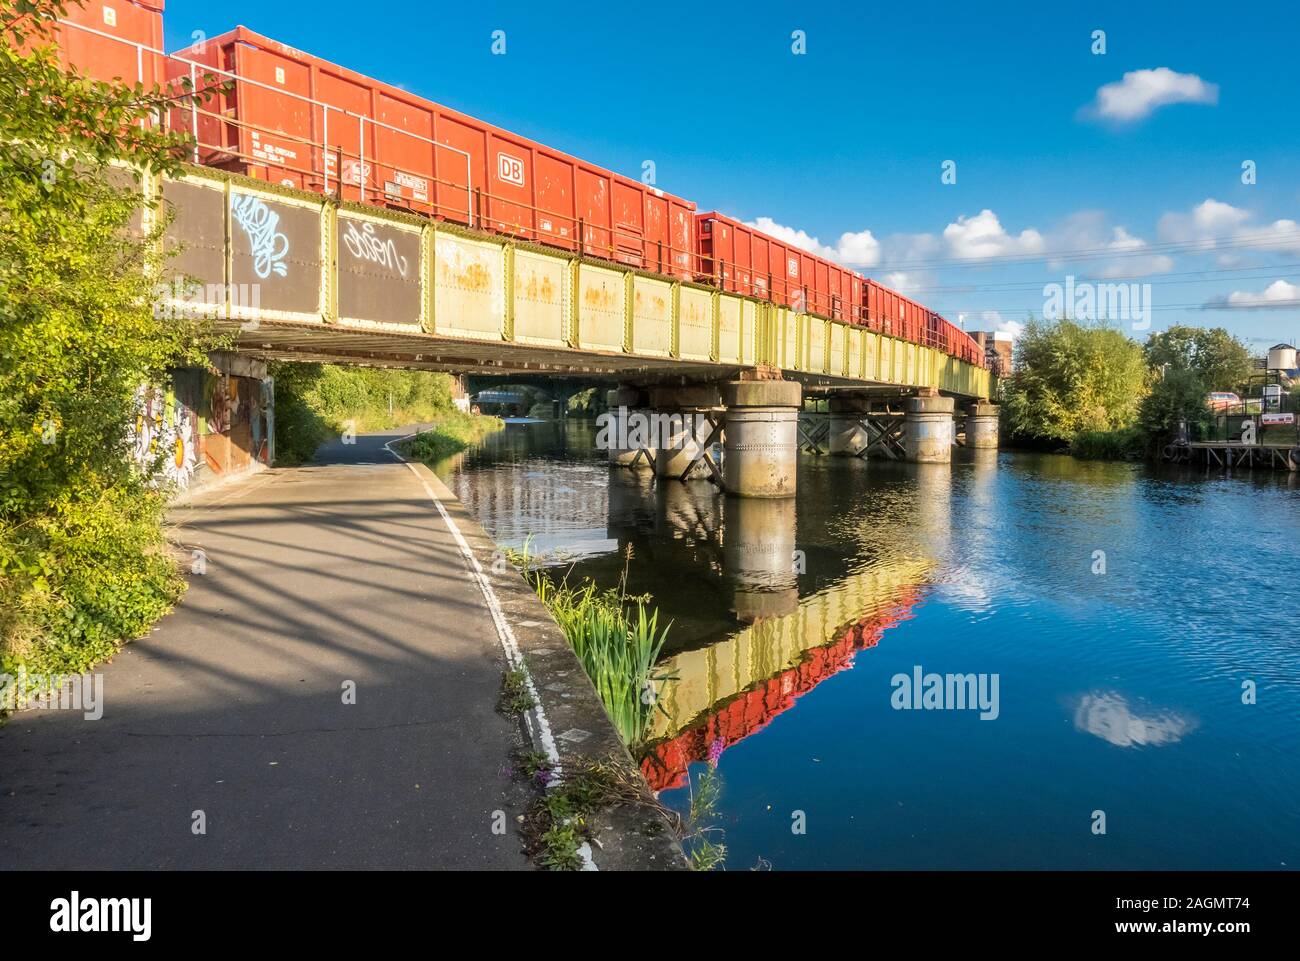 An orange goods train crossing on a green railway bridge over the RIver Nene in central Peterborough, Cambridgeshire, England Stock Photo